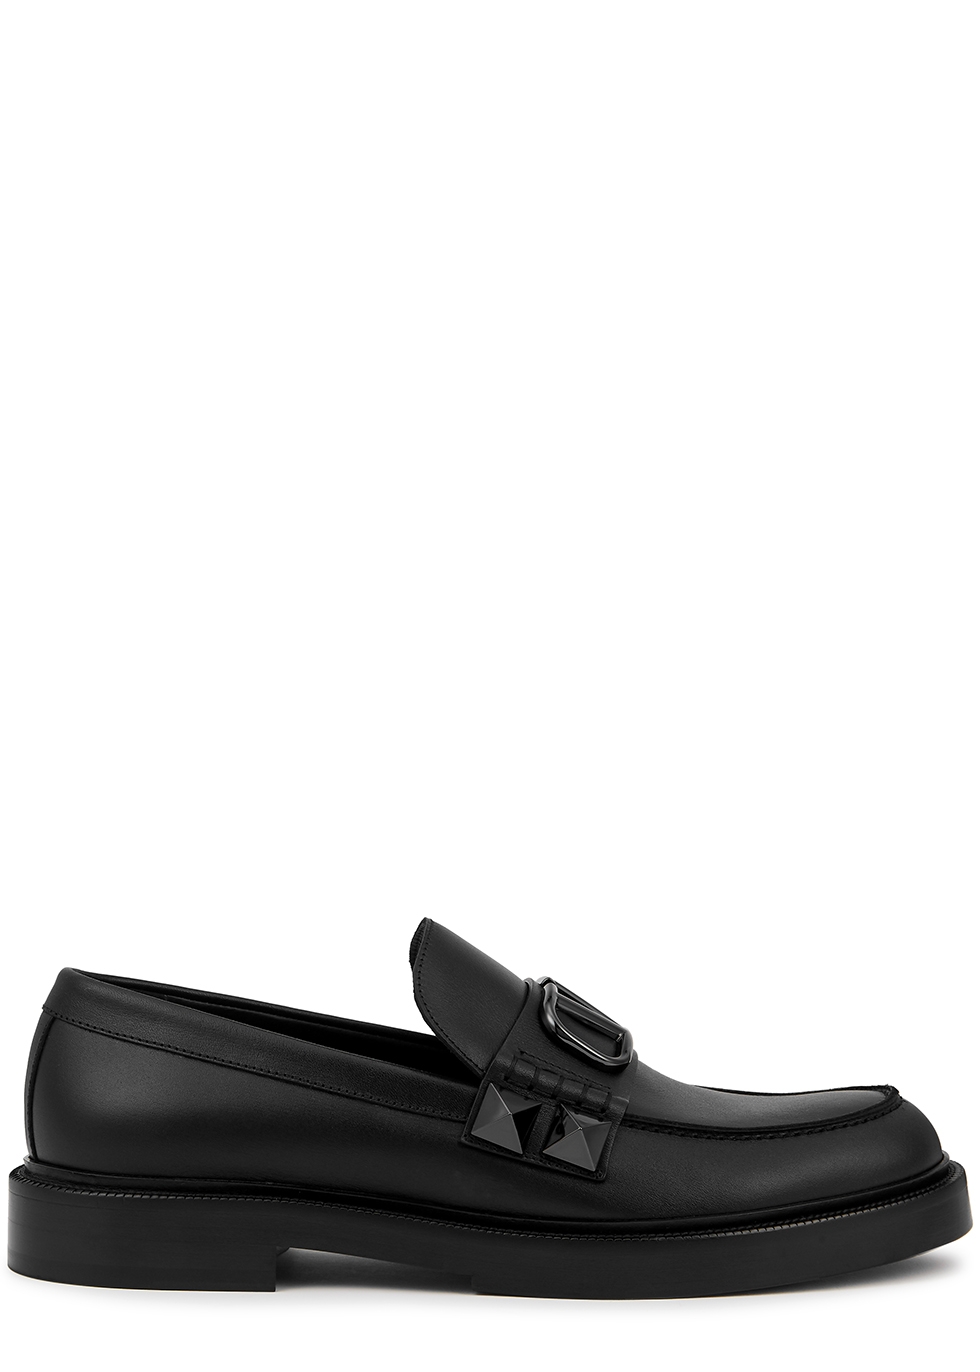 Valentino Valentino Garavani black studded leather loafers - Harvey Nichols